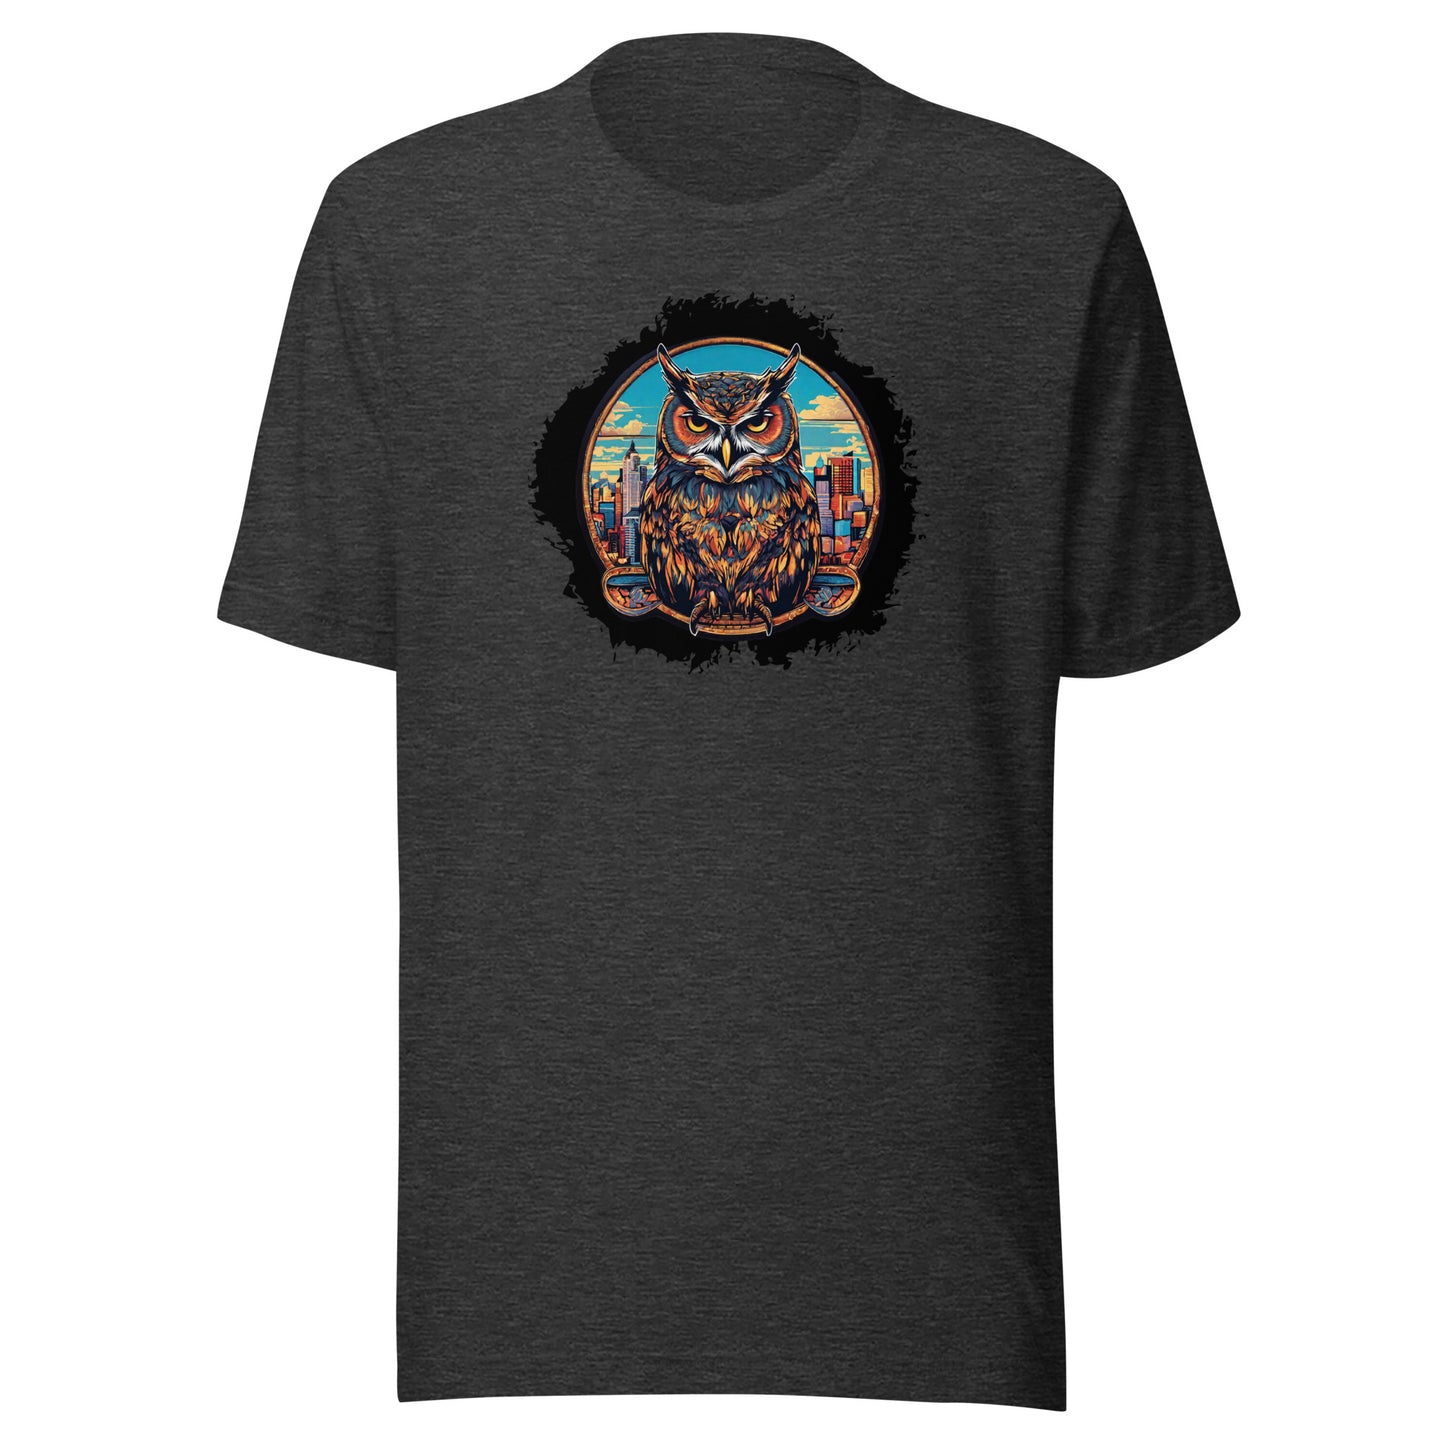 Owl in the City Emblem T-Shirt Dark Grey Heather